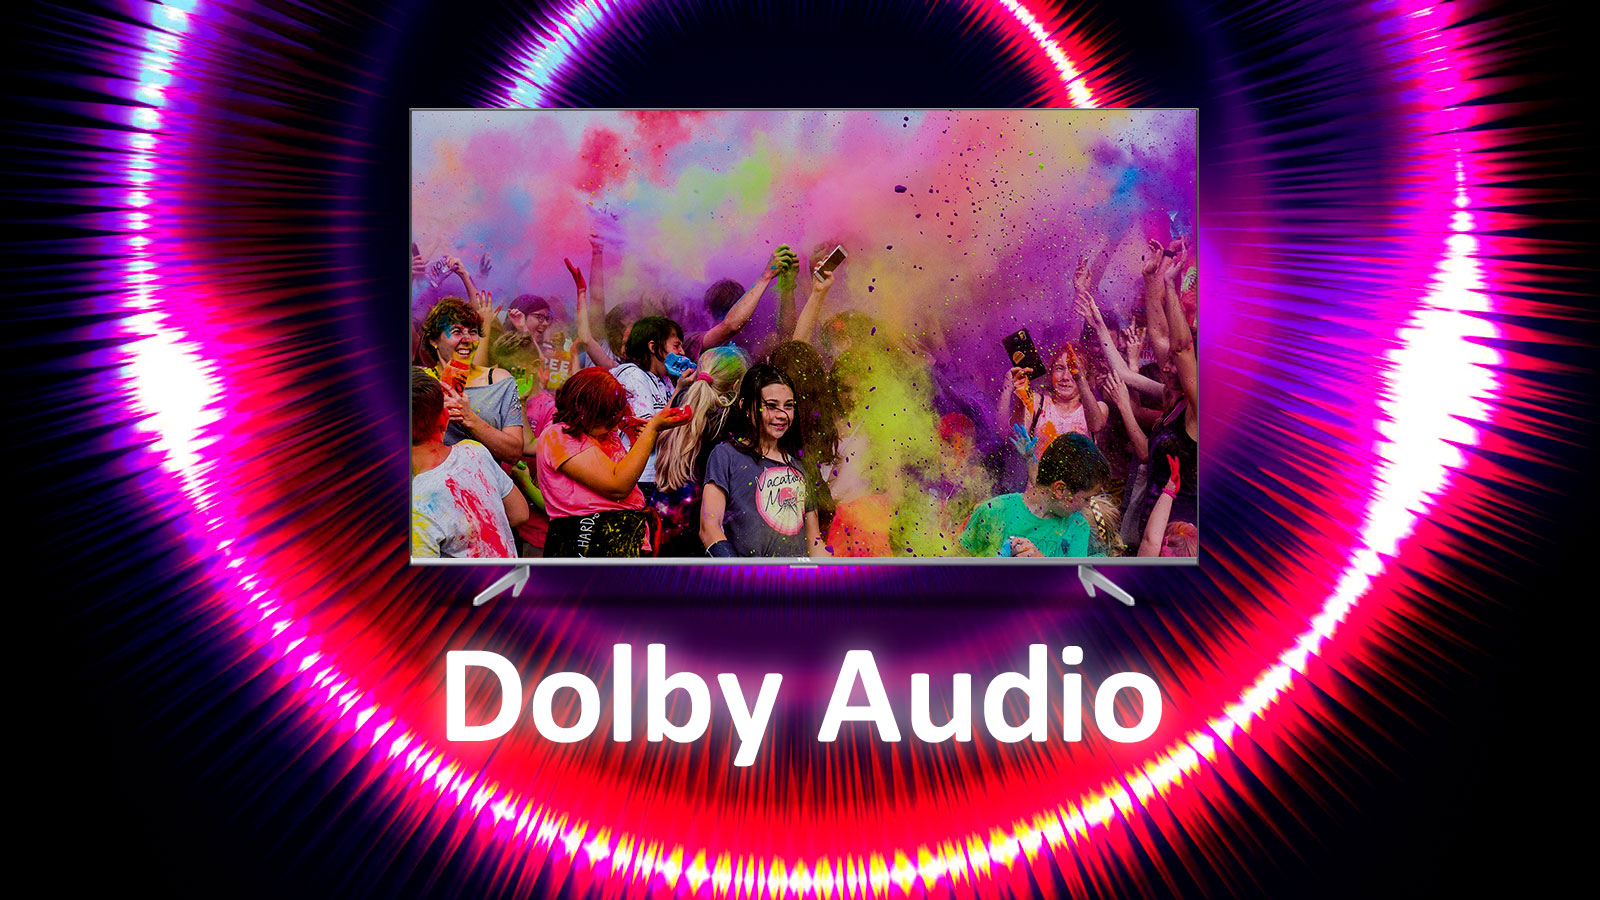 سیستم صوتی dolby audio